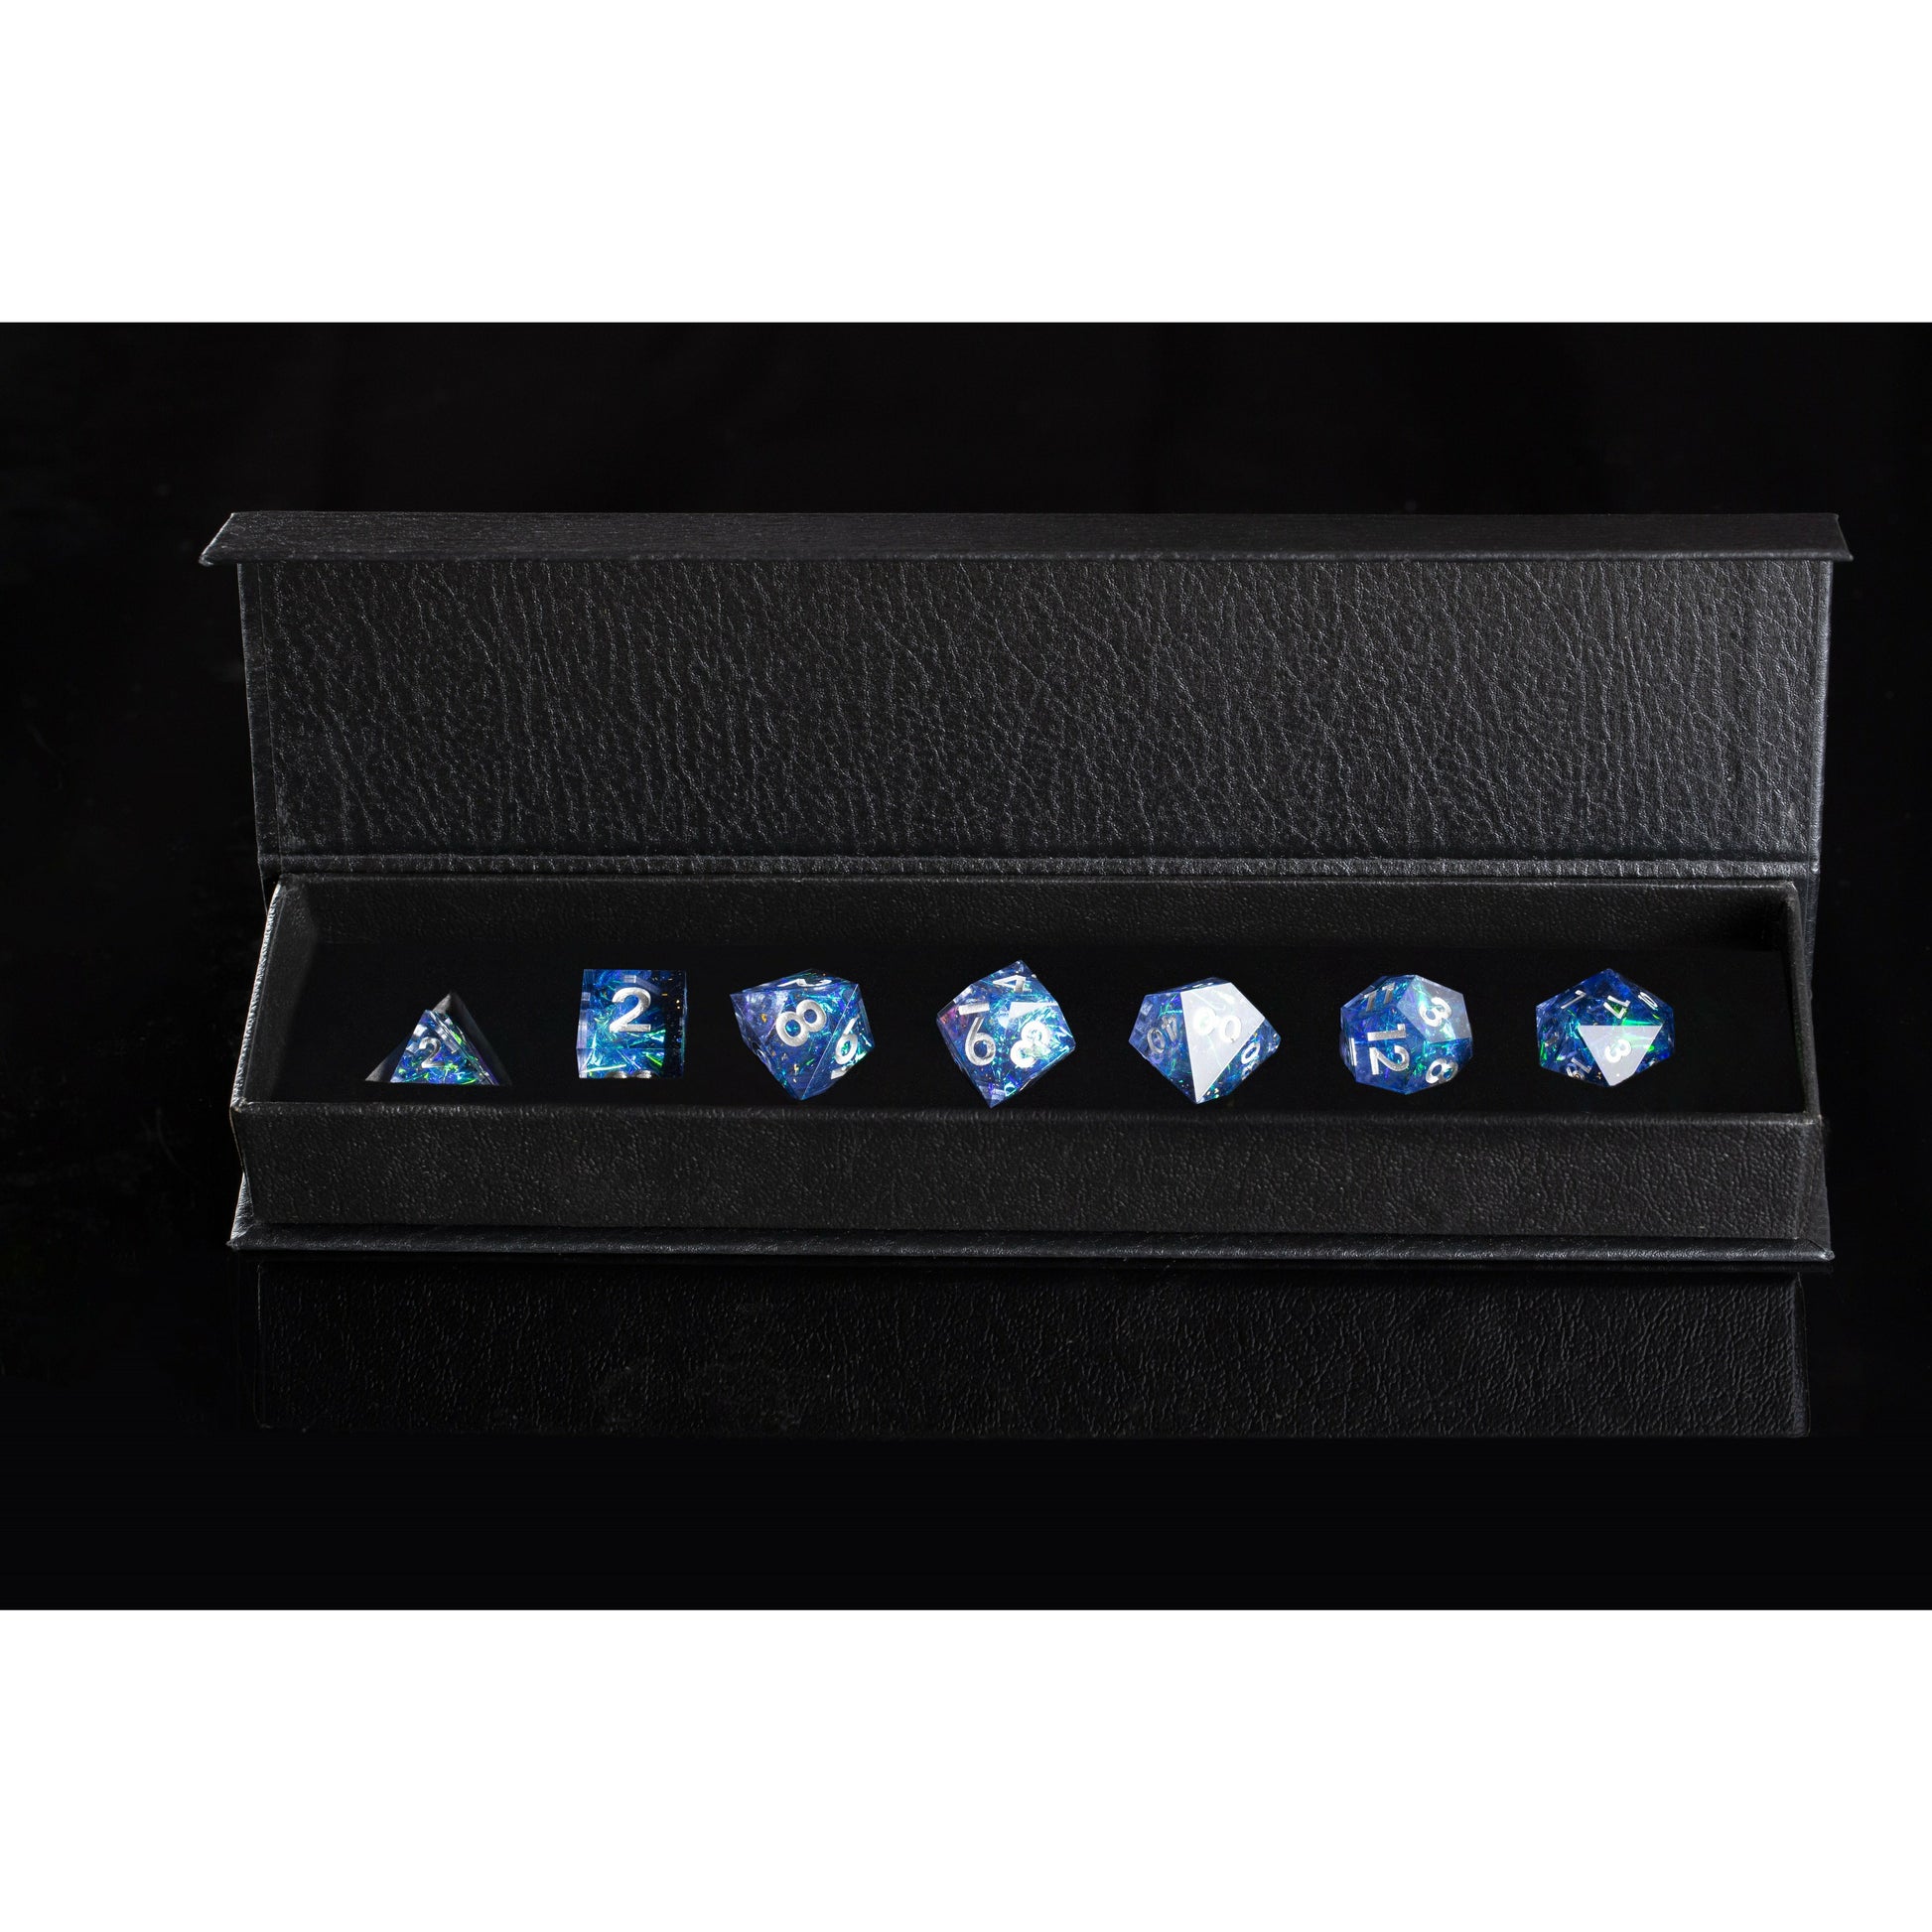 Blue dice set in black leather dice box